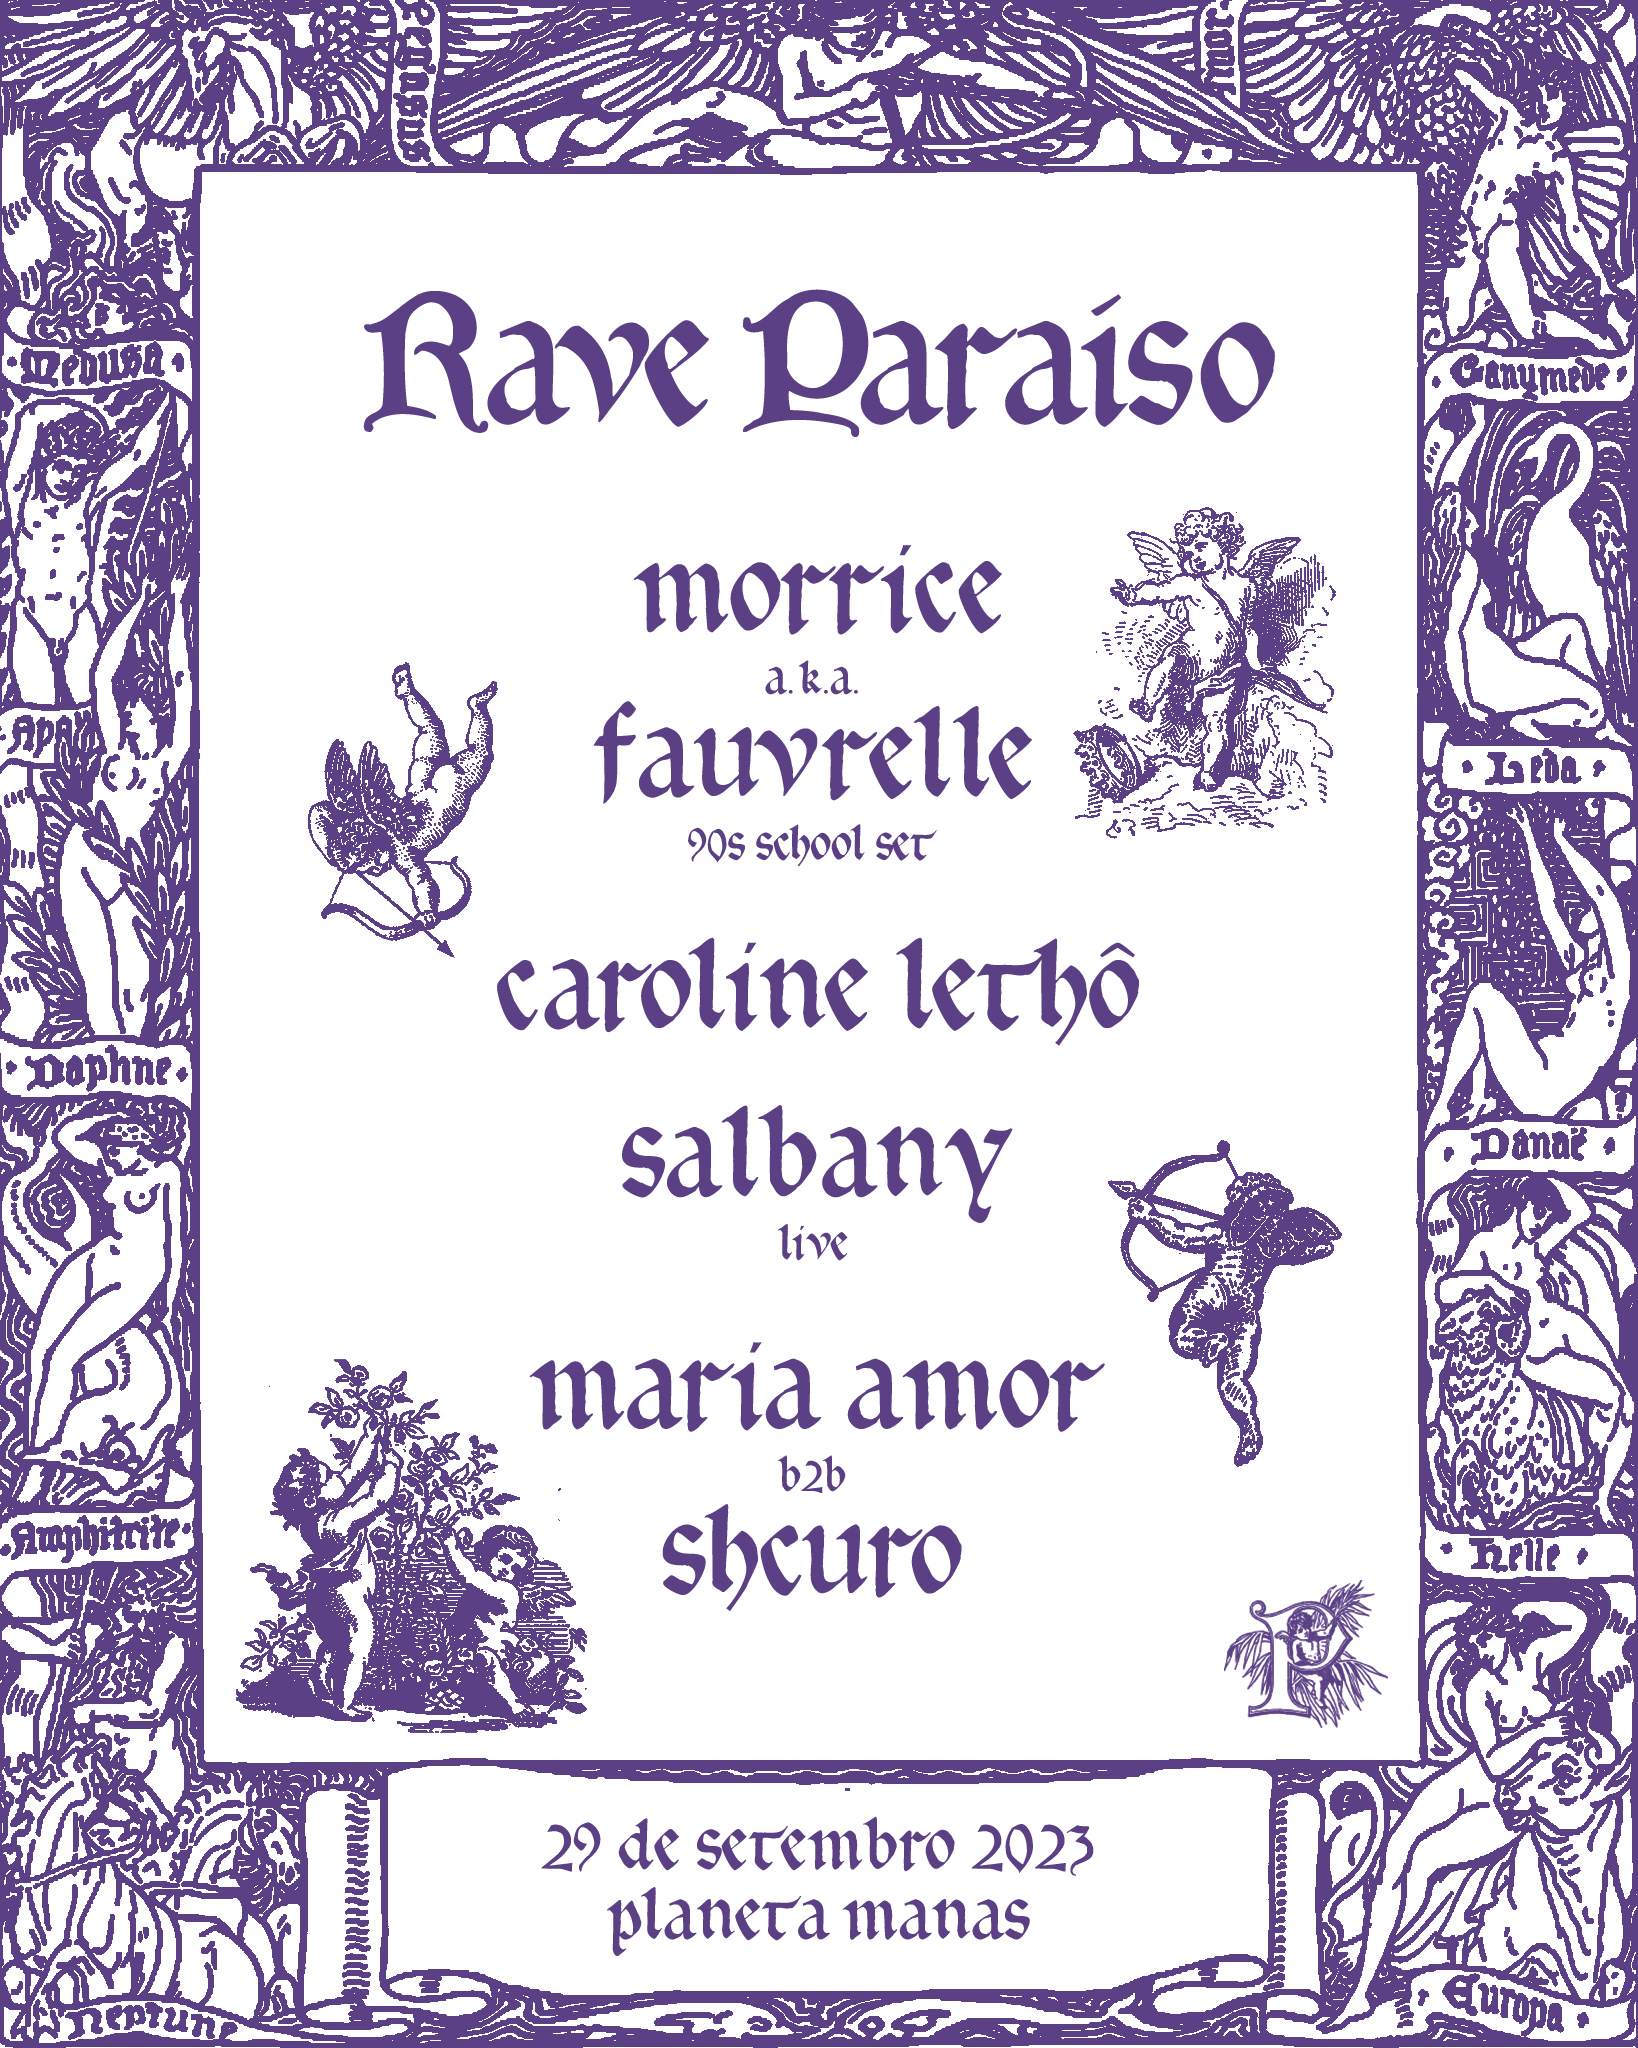 Rave Paraíso - Morrice aka Fauvrelle, Caroline Lethô, Salbany (live), Maria Amor b2b Shcuro - フライヤー表